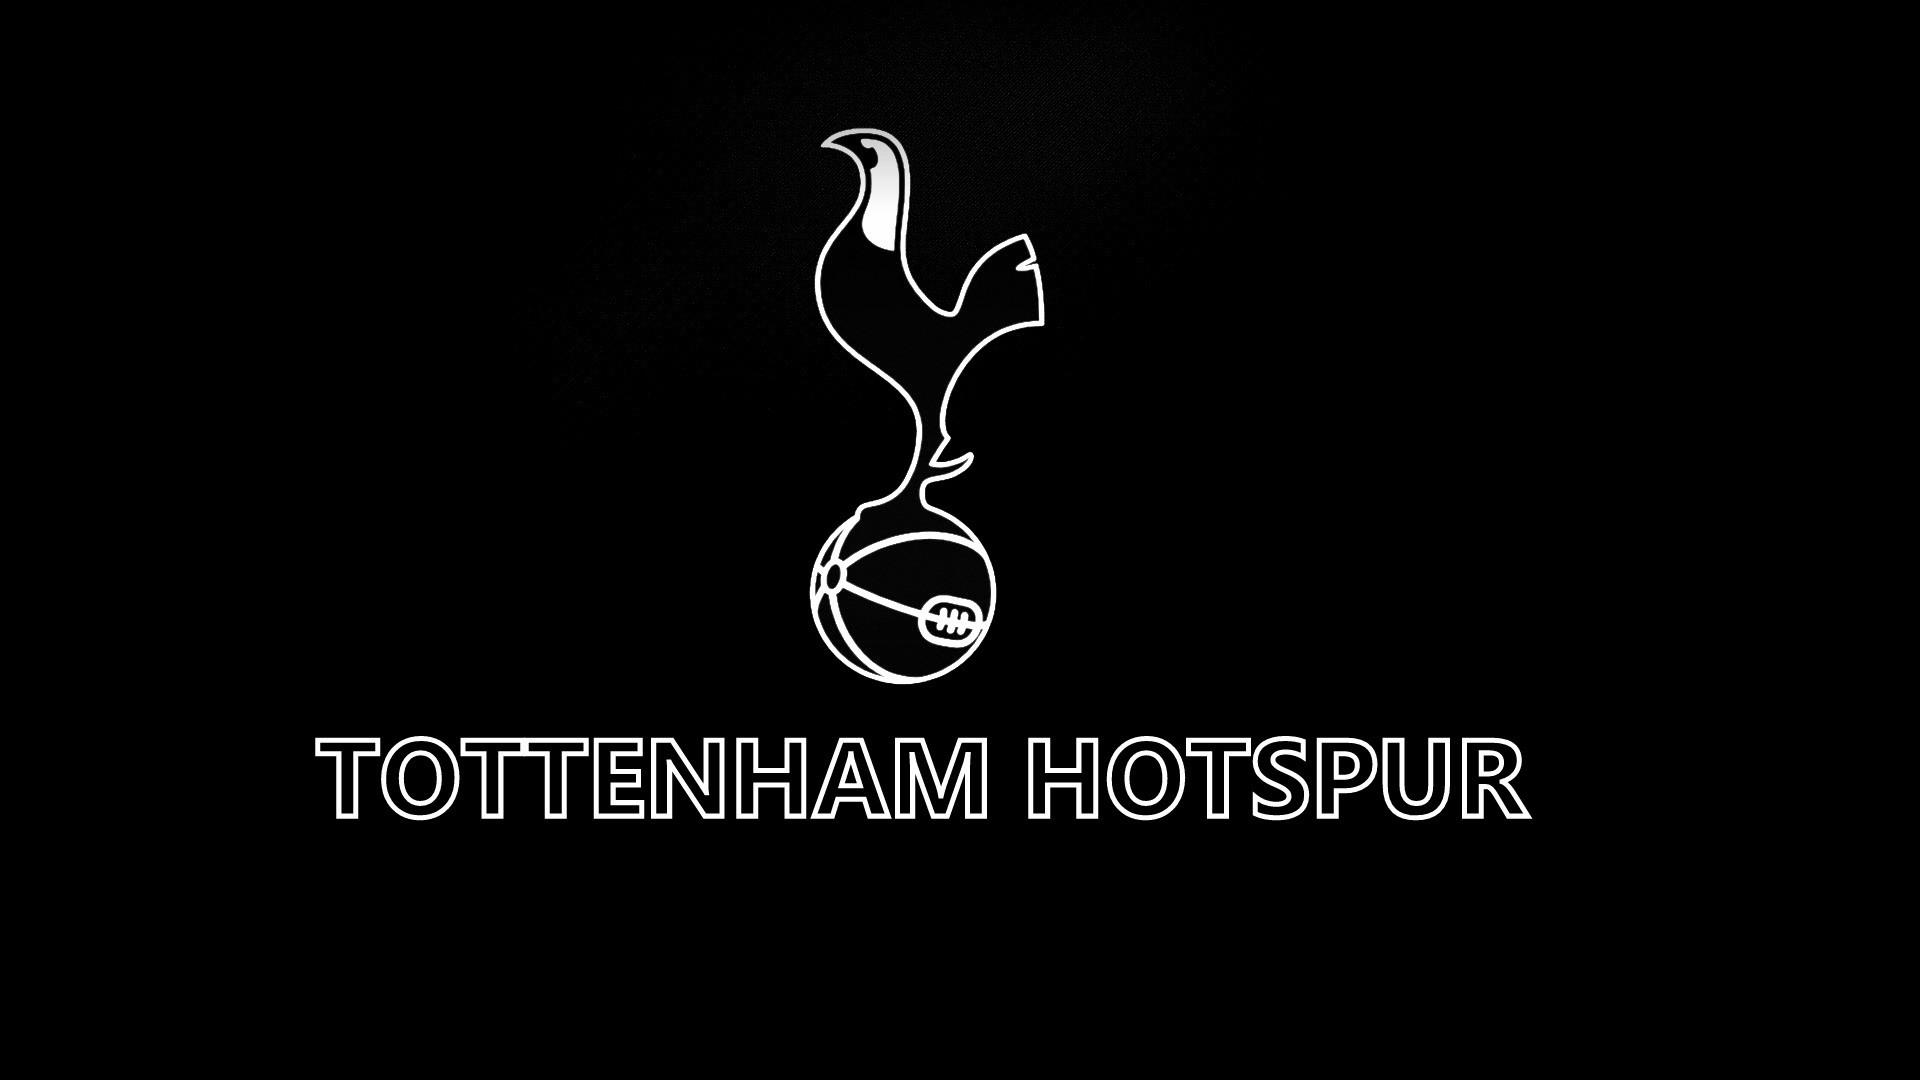 Tottenham Hotspur Wallpaper Image